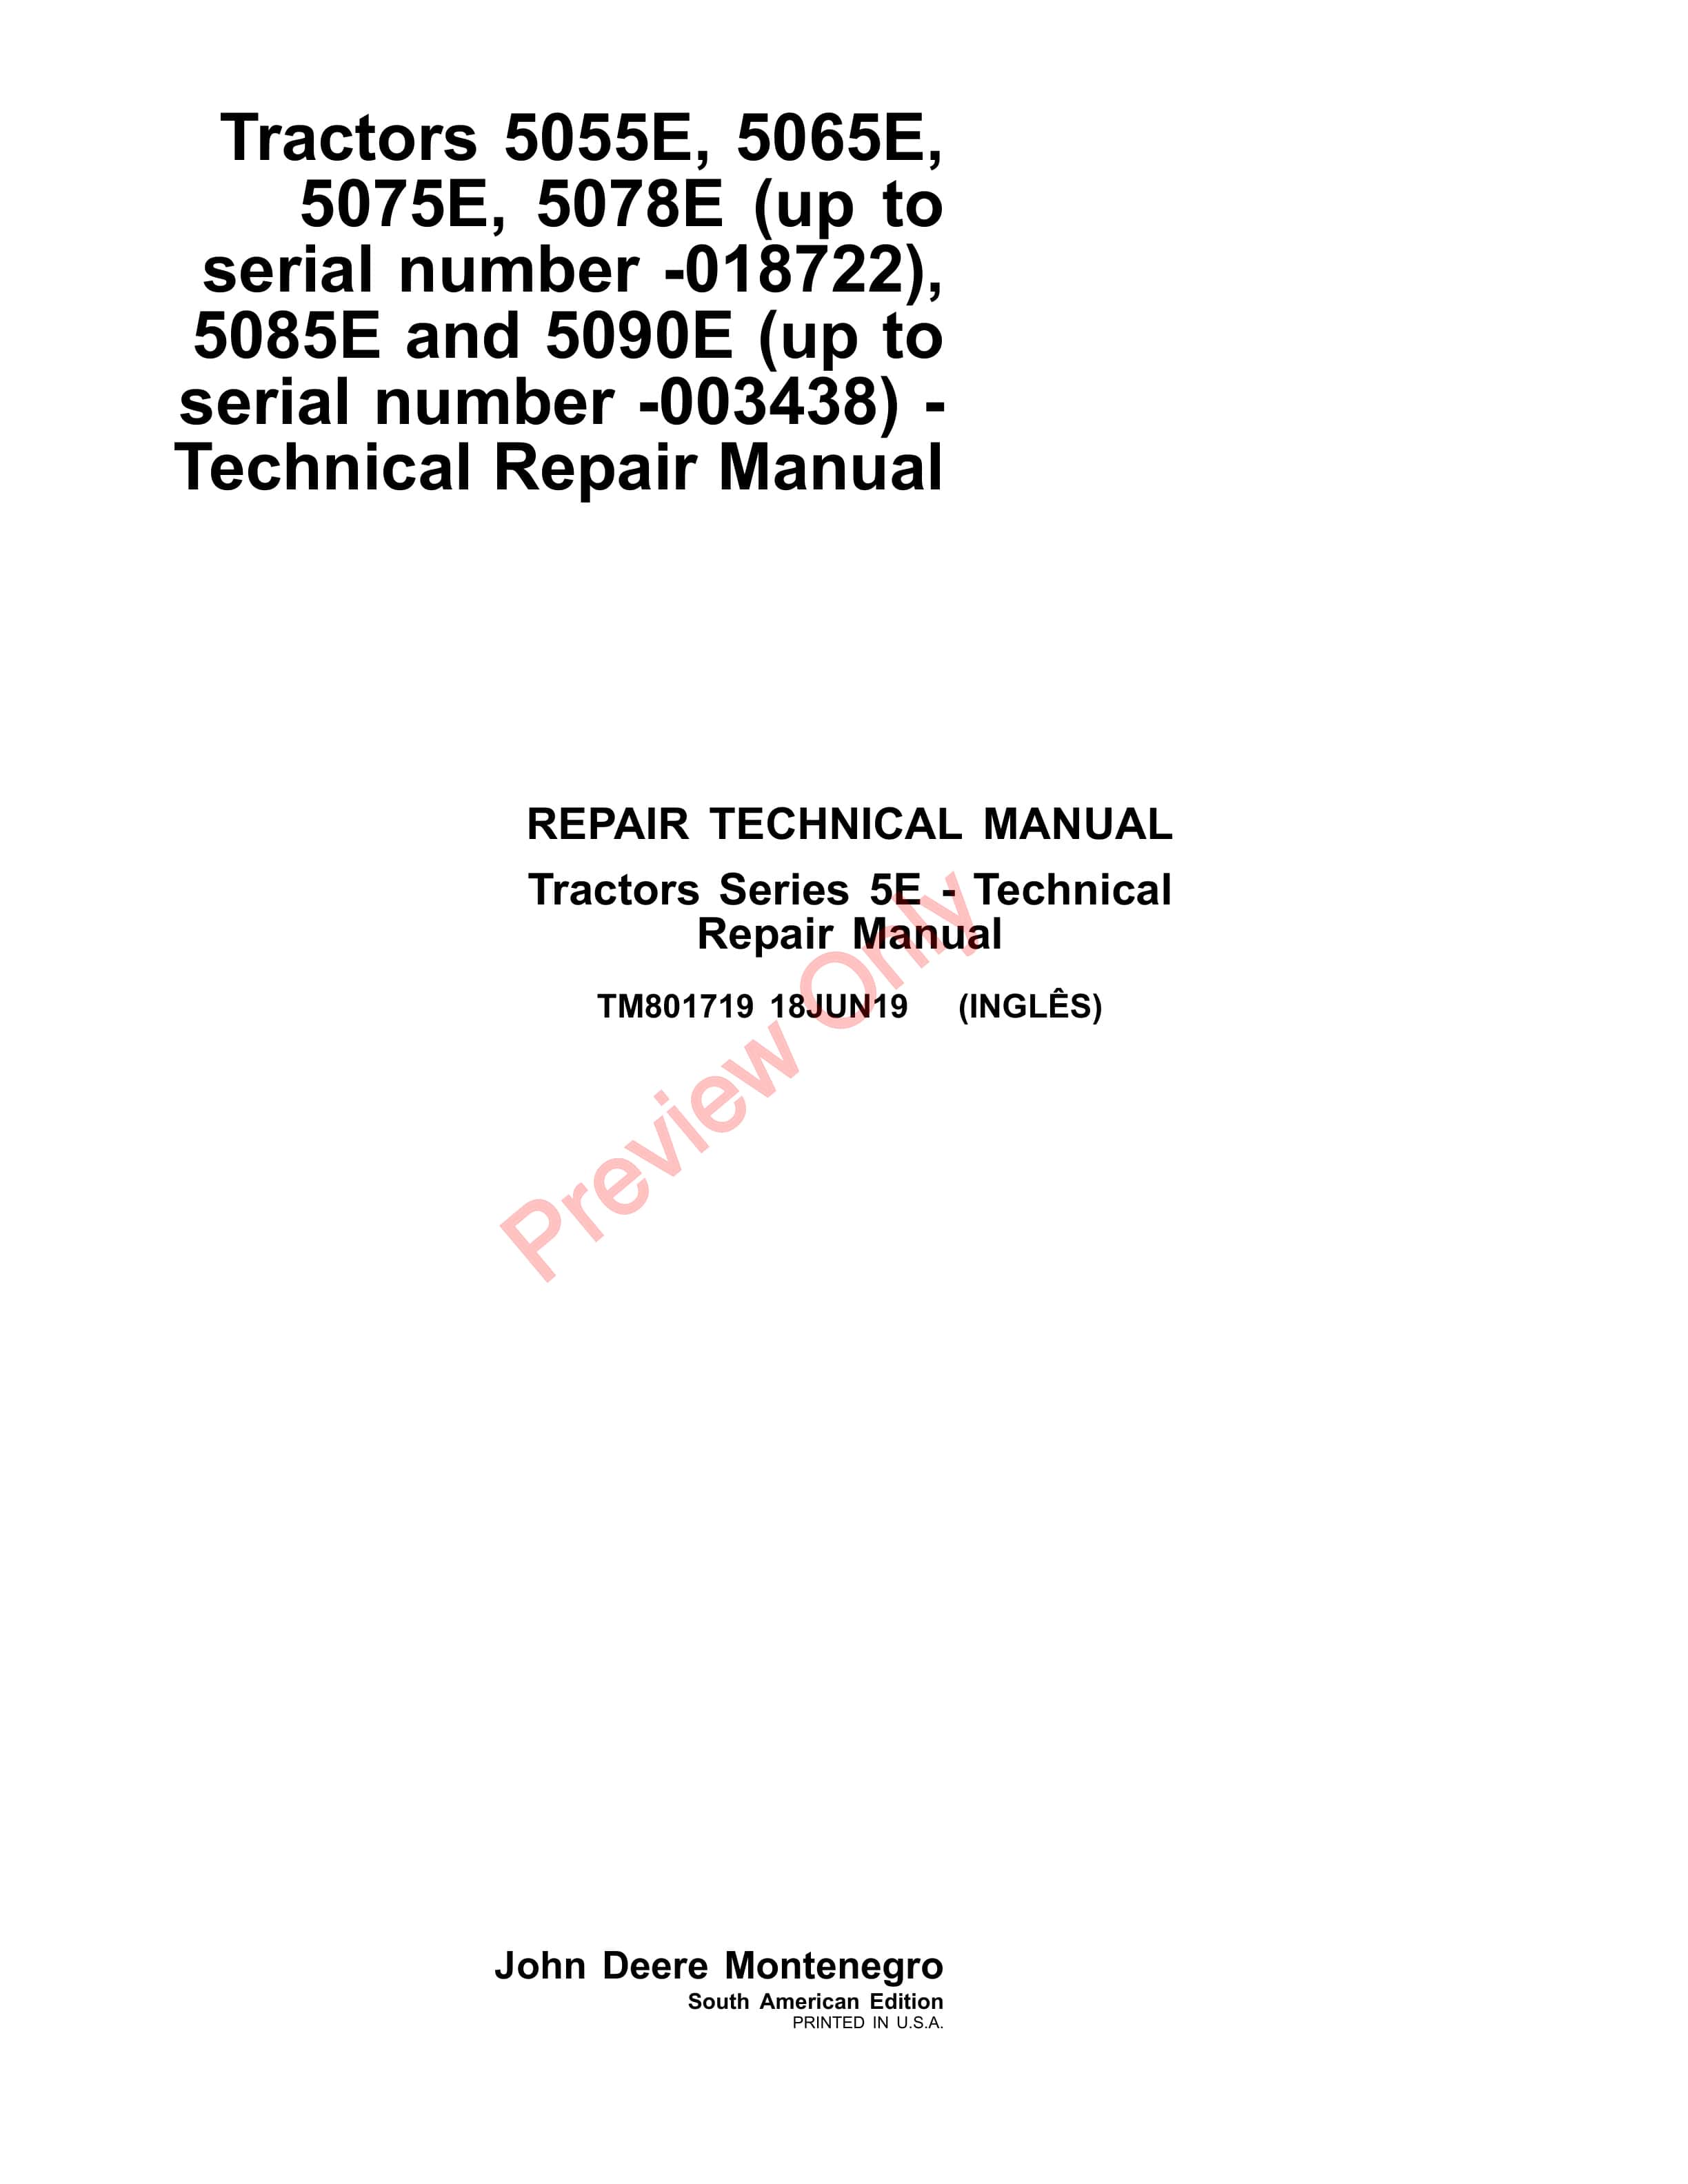 John Deere 5055E 5065E 5075E 5078E 5085E and 5090E Tractors Repair Technical Manual TM801719 18JUN19 1